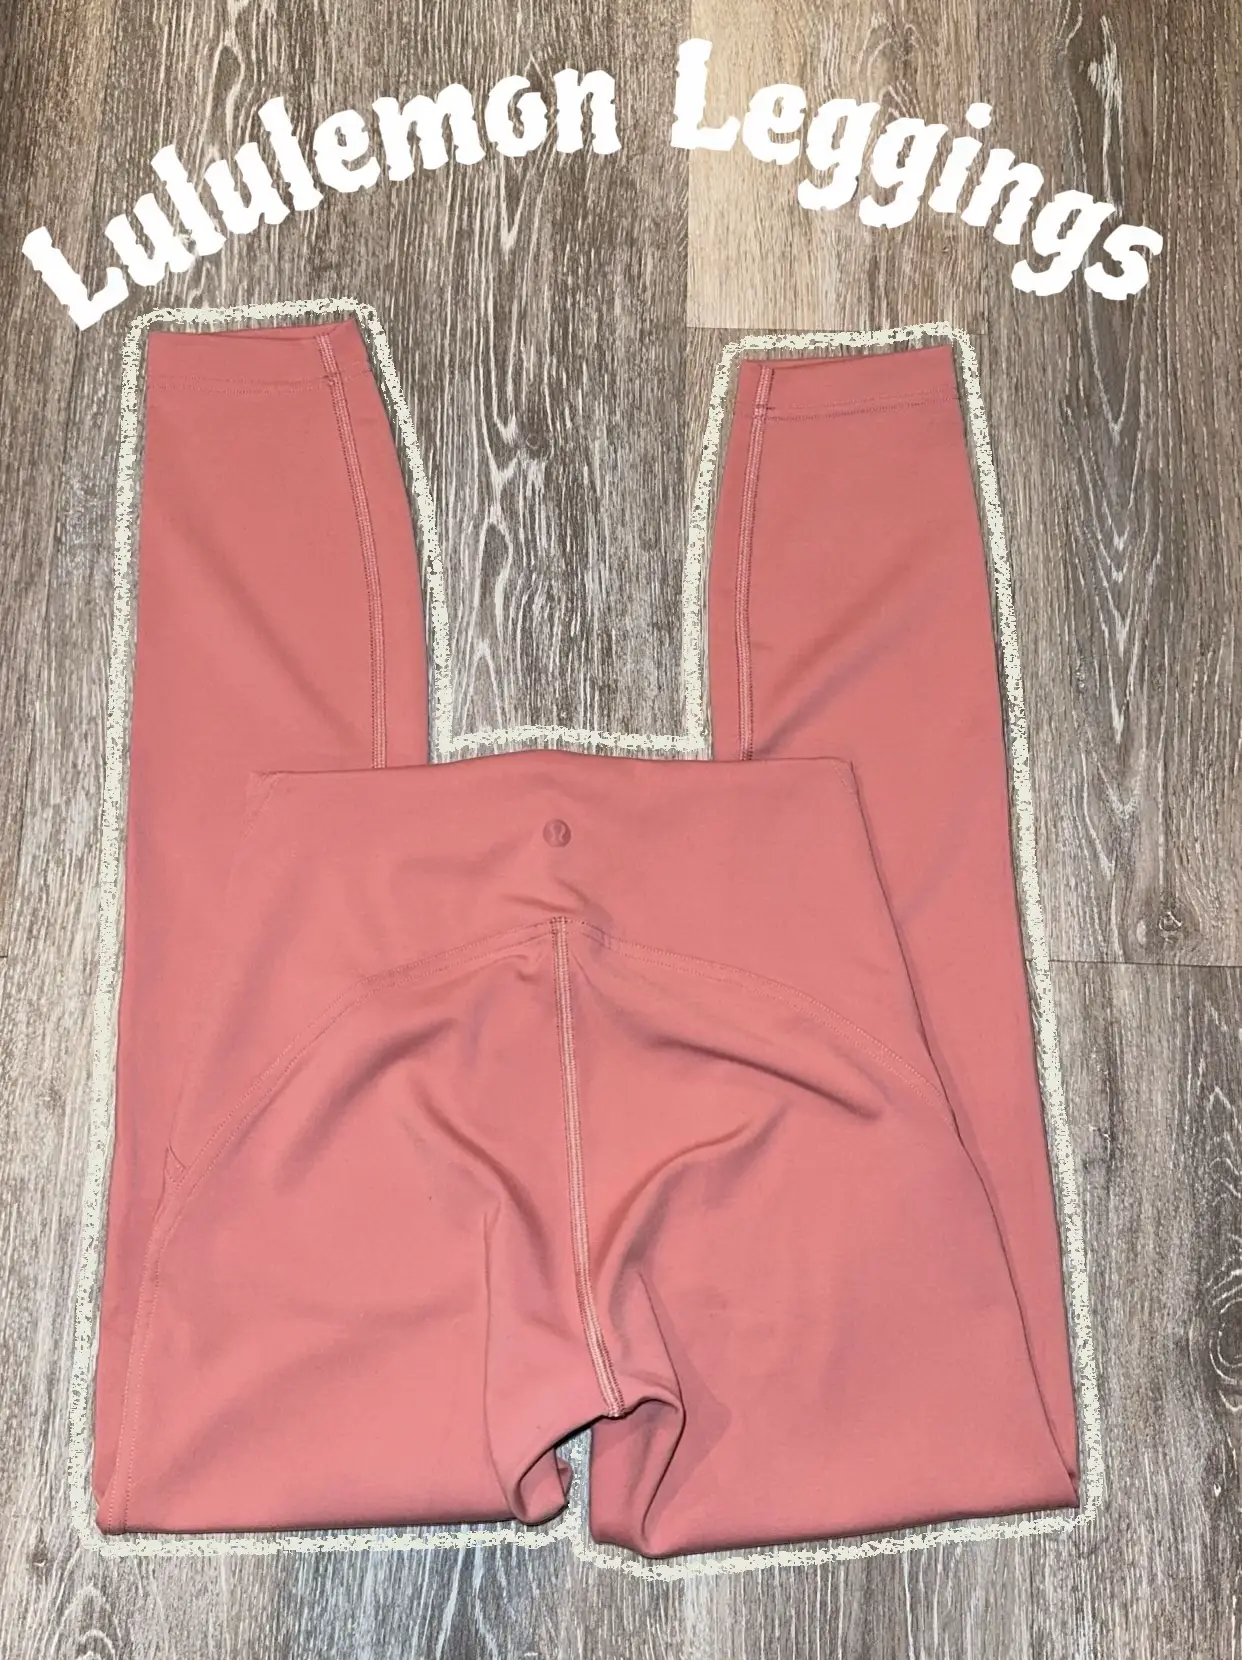 lululemon “grape leaf” align leggings 😊 size 2 & so - Depop